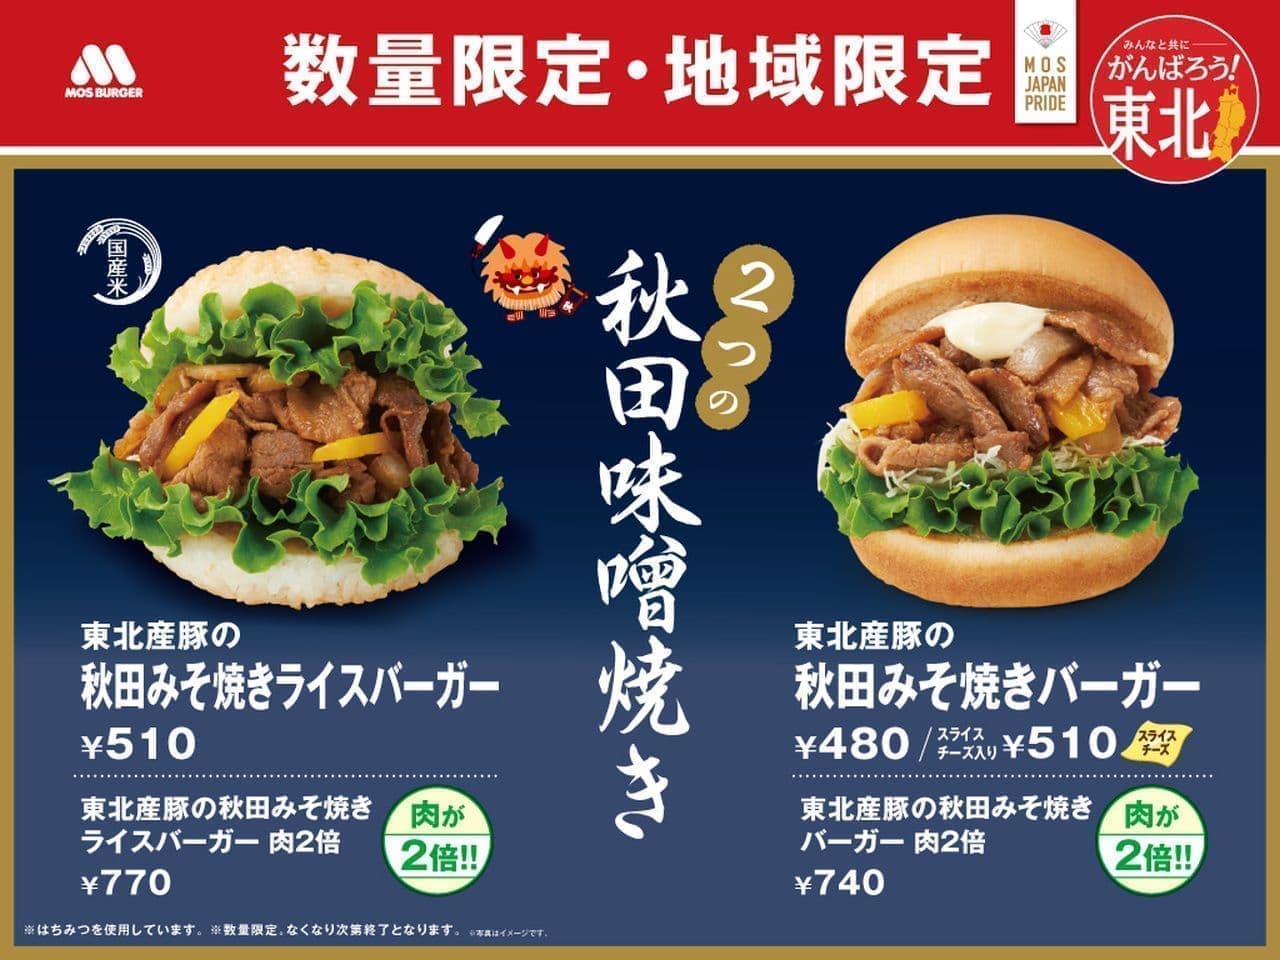 Mos Burger "Akita miso-yaki burger from Tohoku pork" "Akita miso-yaki rice burger from Tohoku pork"